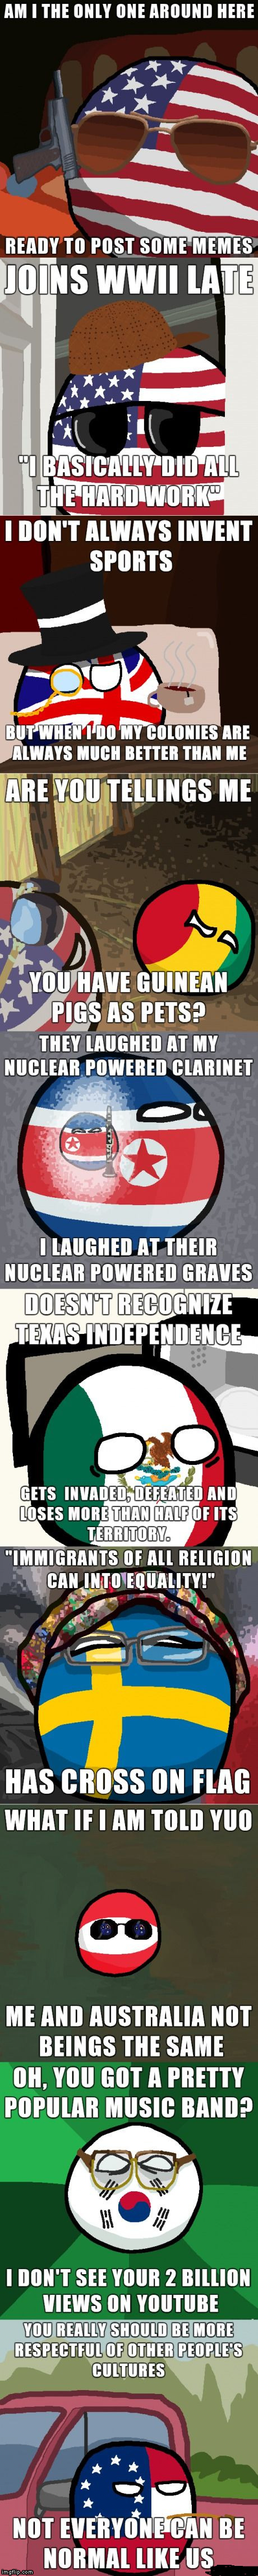 Polandball Meme REVOLUTION!! | image tagged in memes,funny,polandball,meme revolution | made w/ Imgflip meme maker